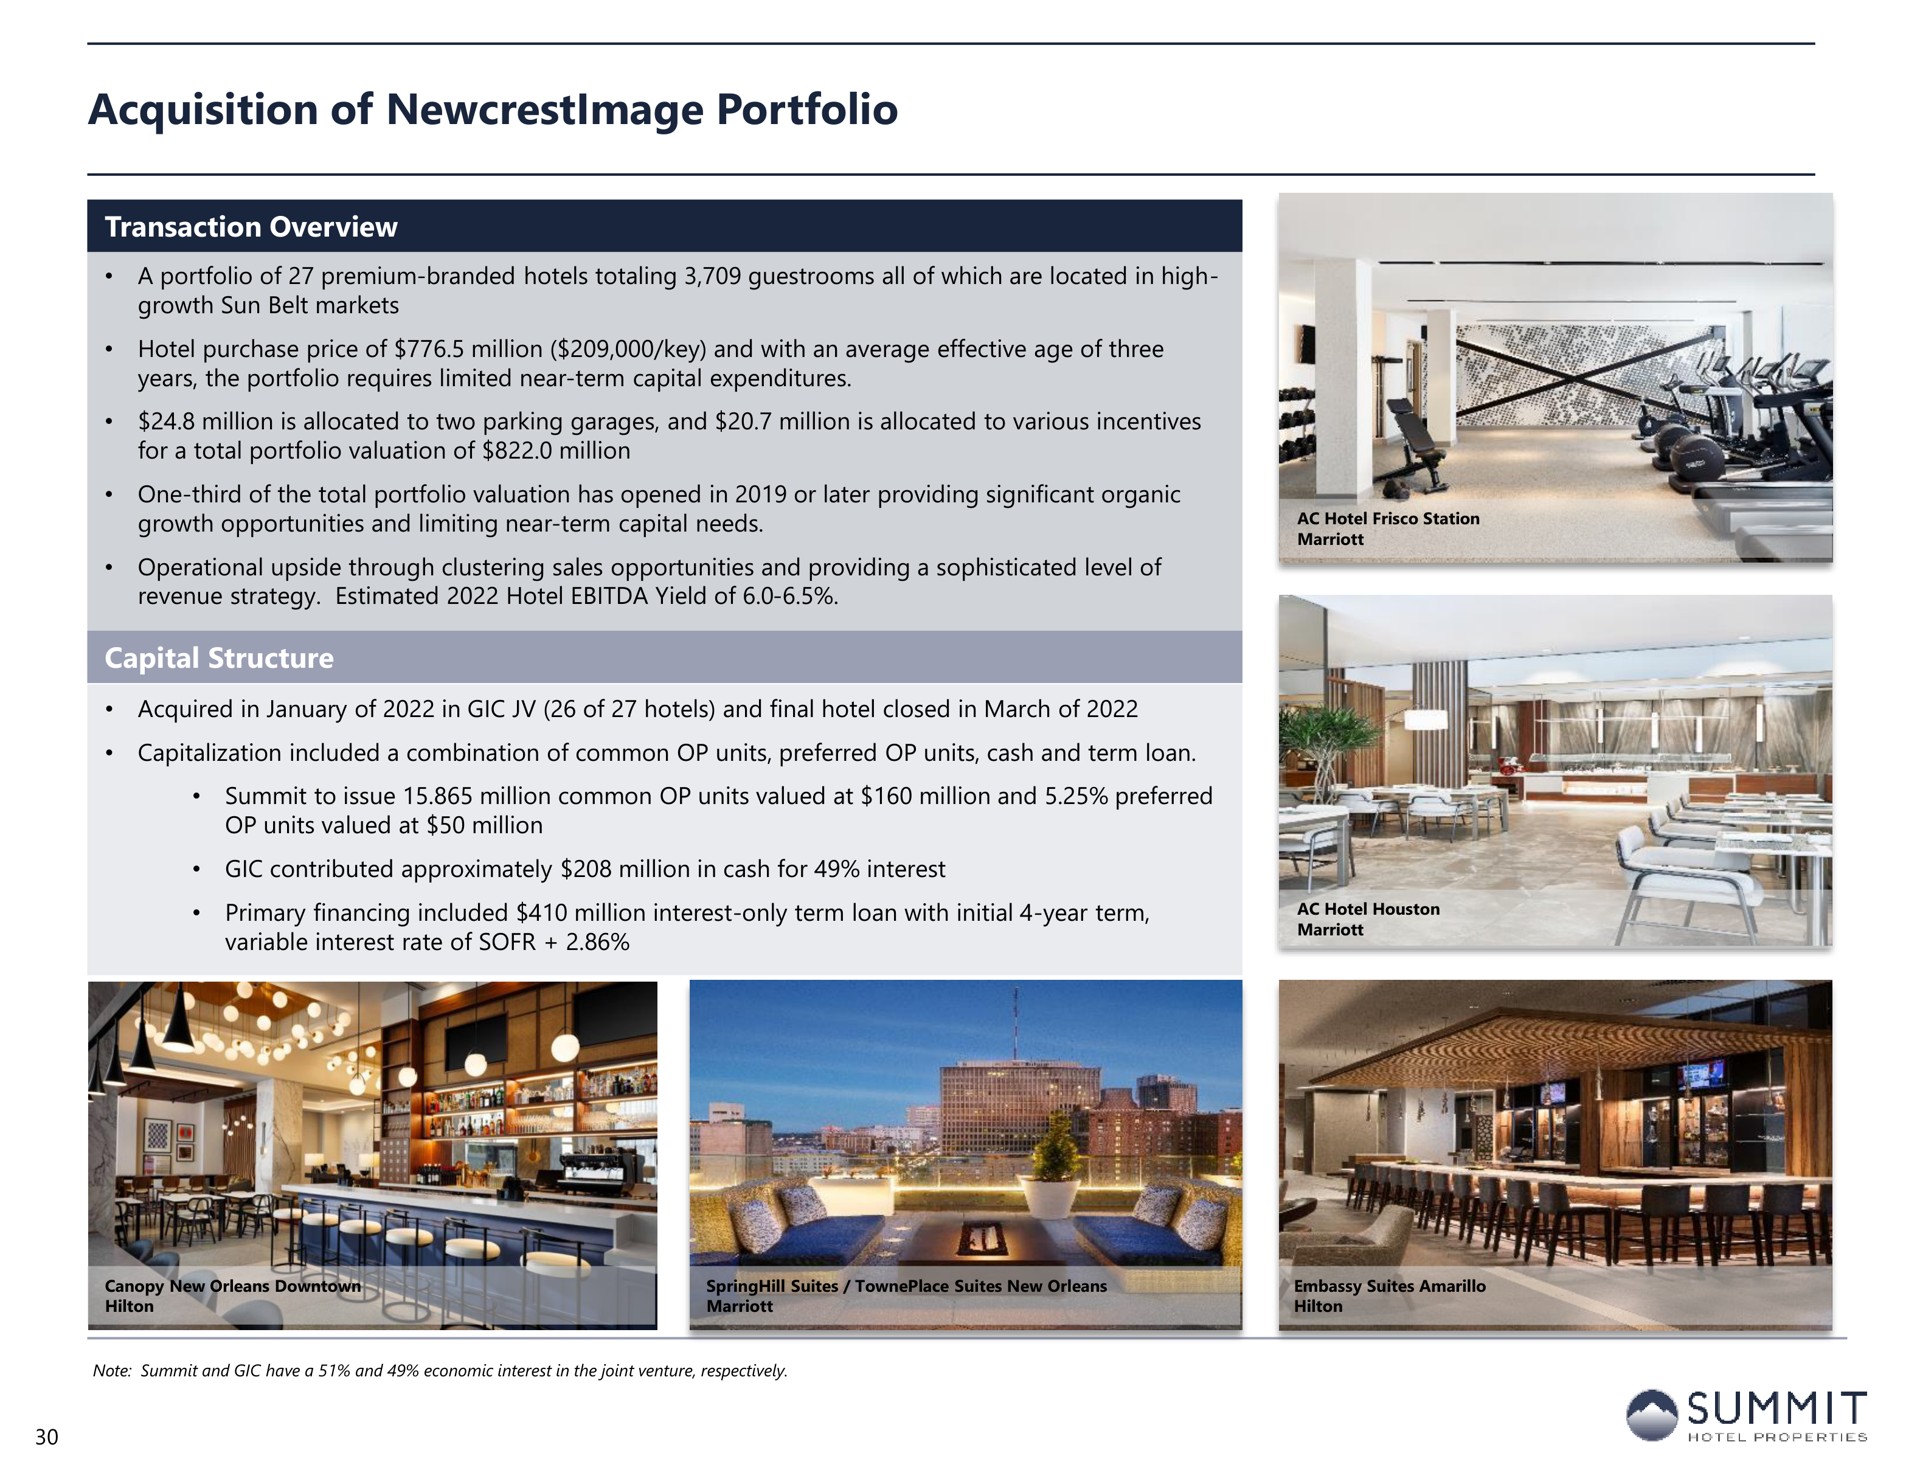 acquisition of portfolio summit | Summit Hotel Properties